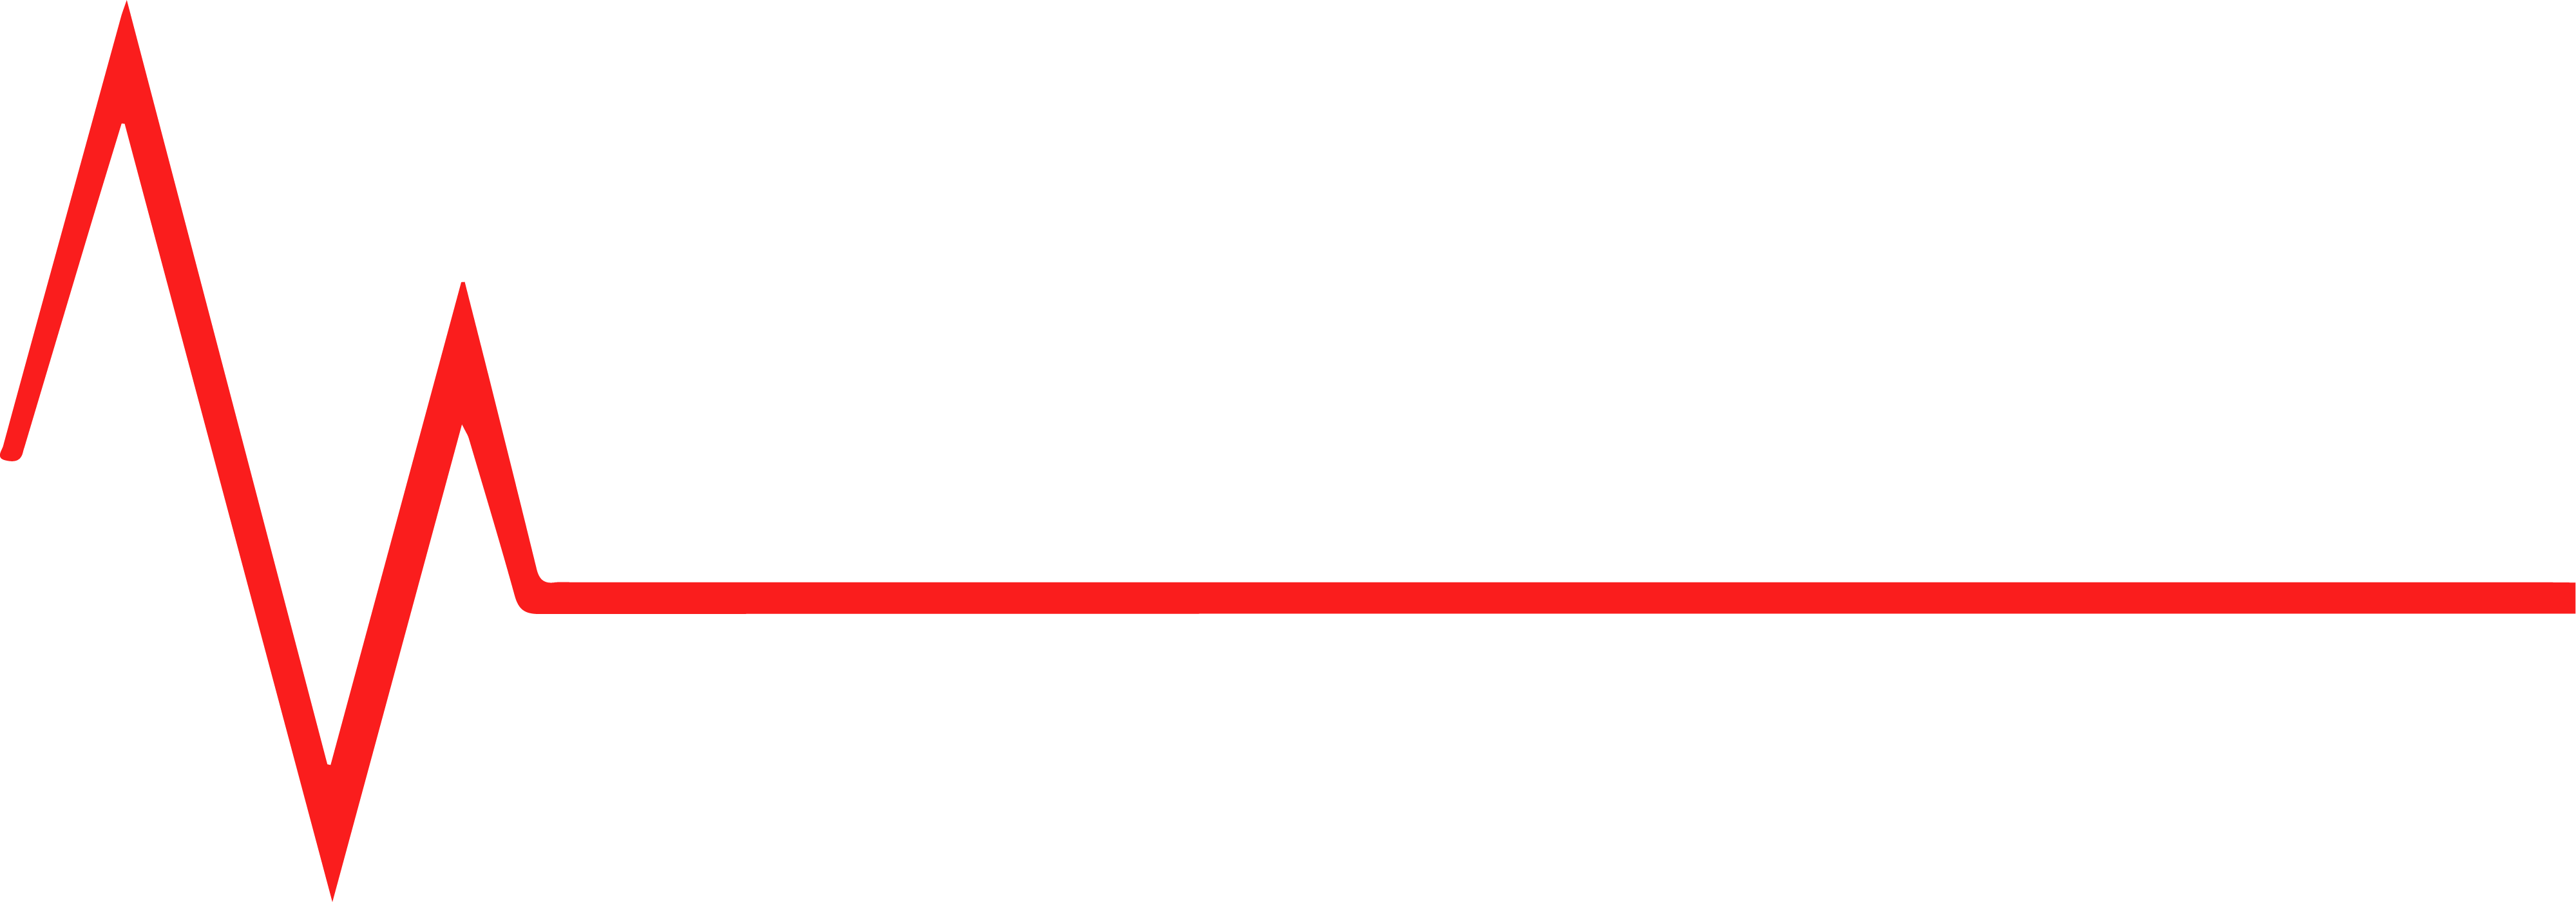 Autotec Logo (White) — Autotec Auto Repair and Mechanics Services in Invercargill New Zealand